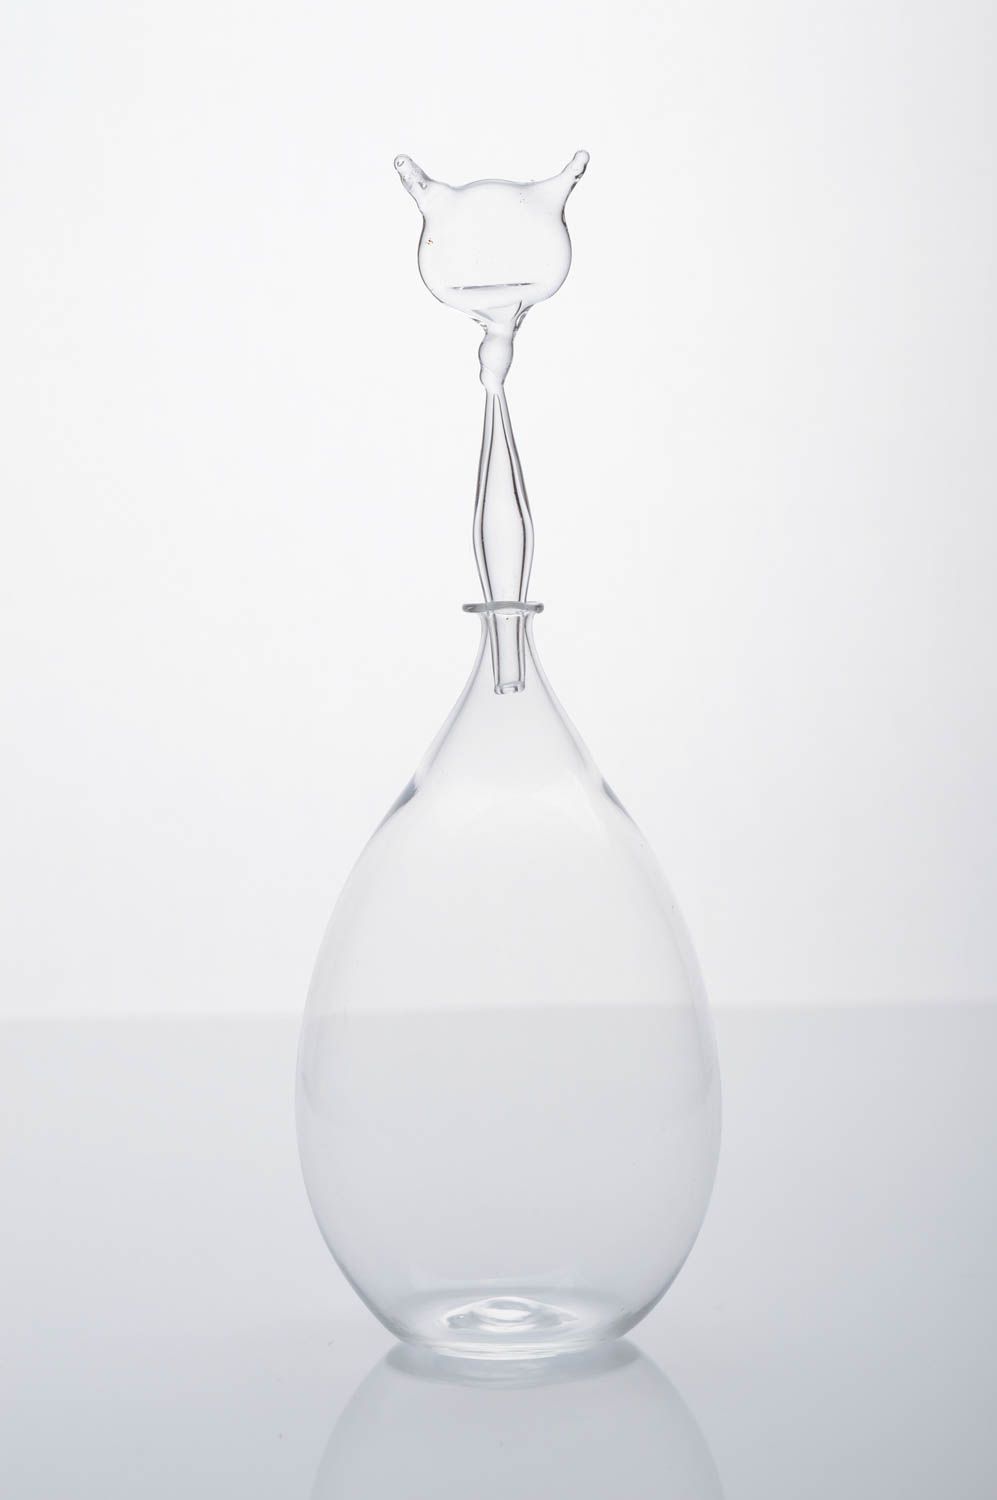 Handmade glass vial small glass jars glass art perfume bottle gifts for women photo 1